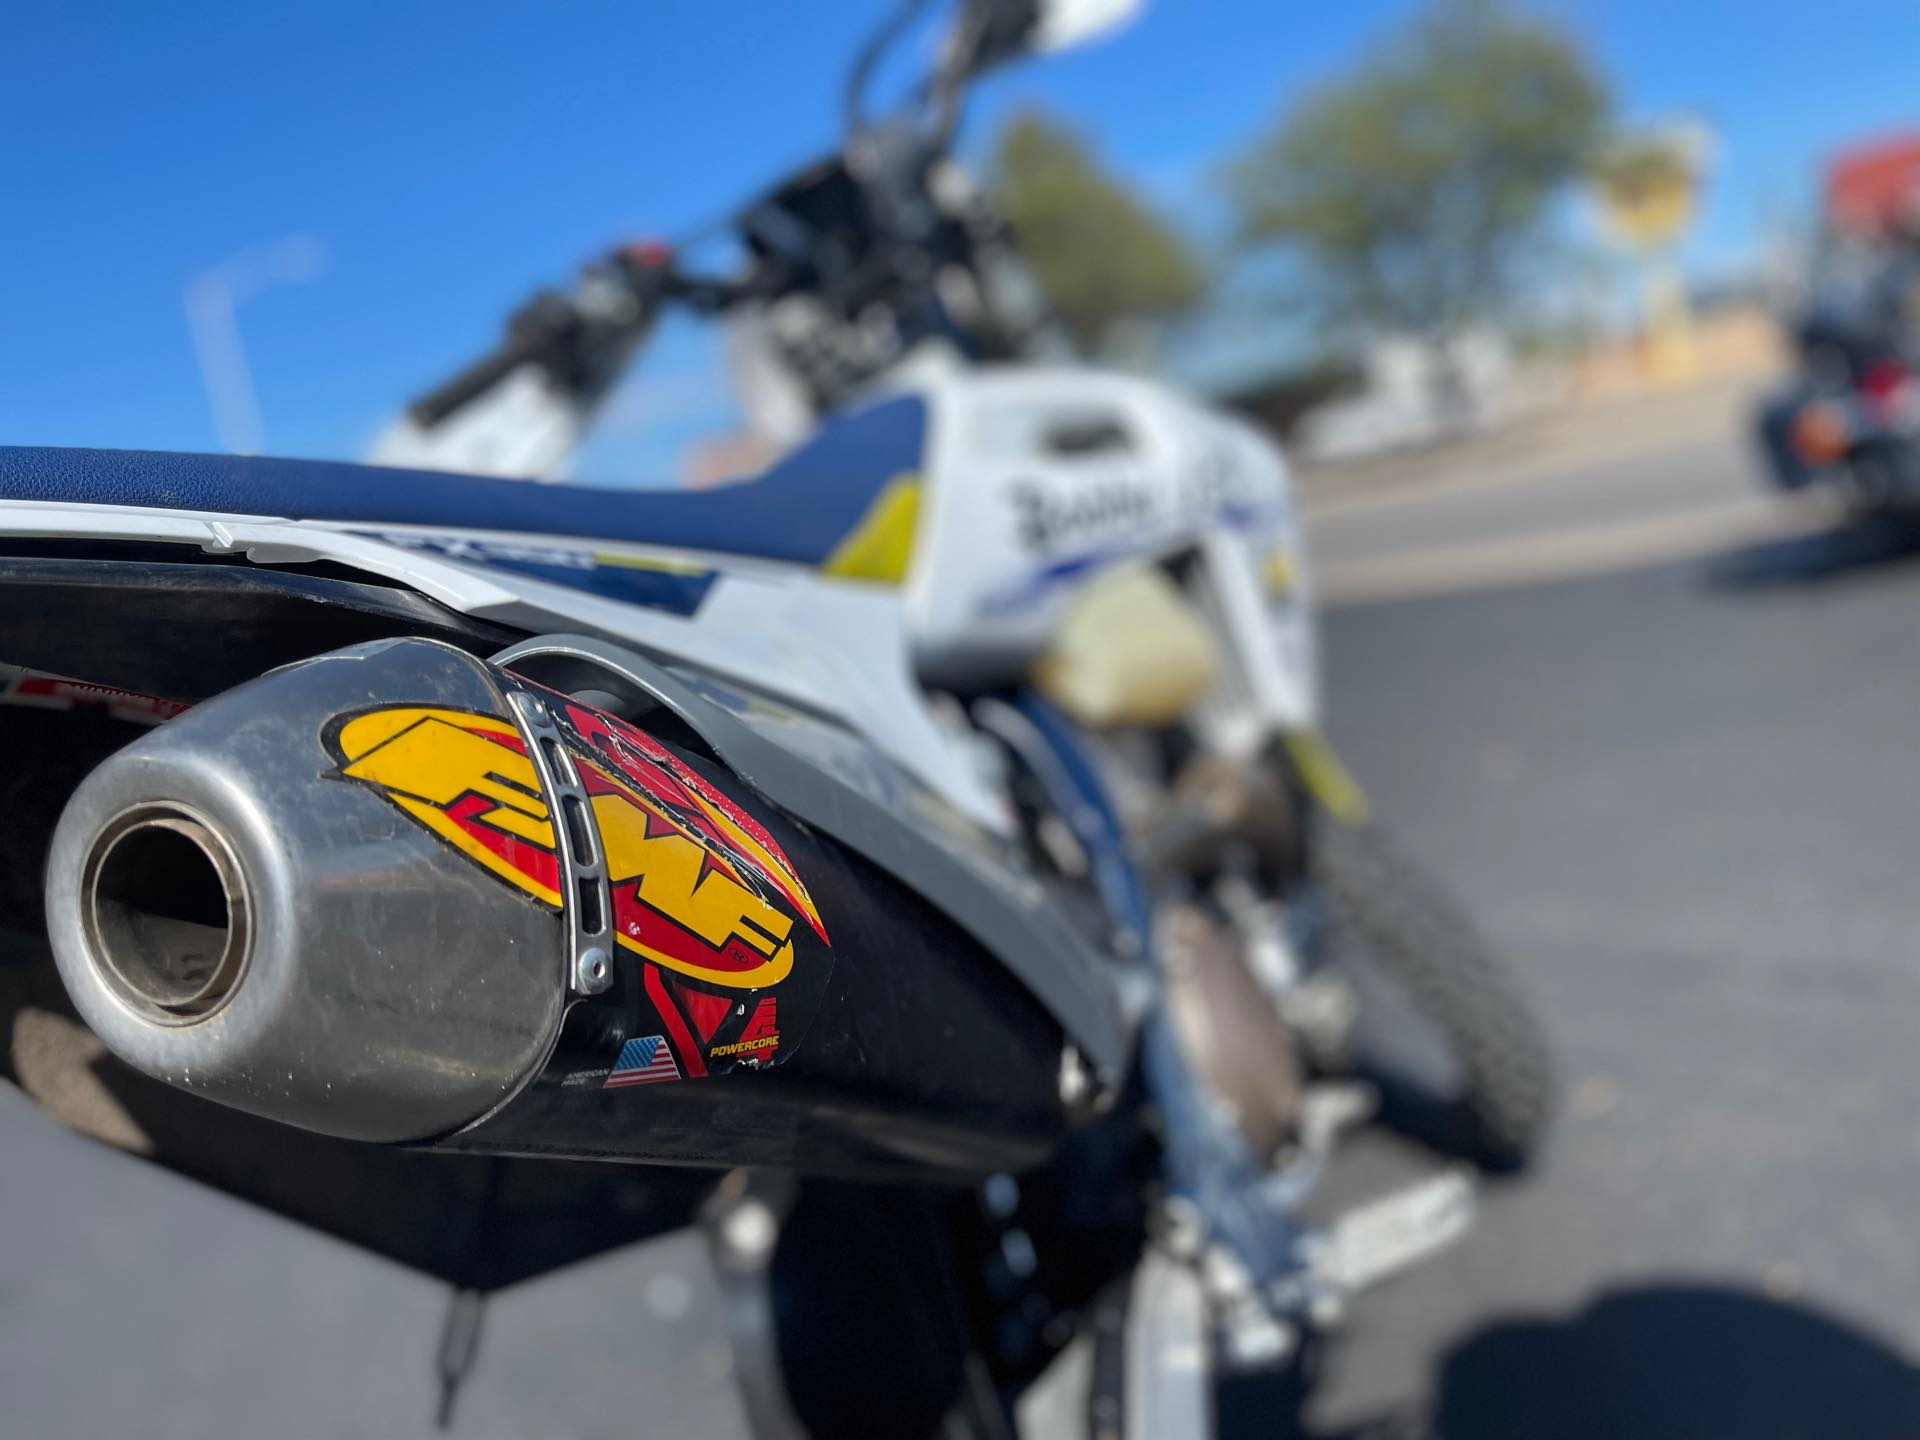 2021 Husqvarna FX 350 at Bobby J's Yamaha, Albuquerque, NM 87110